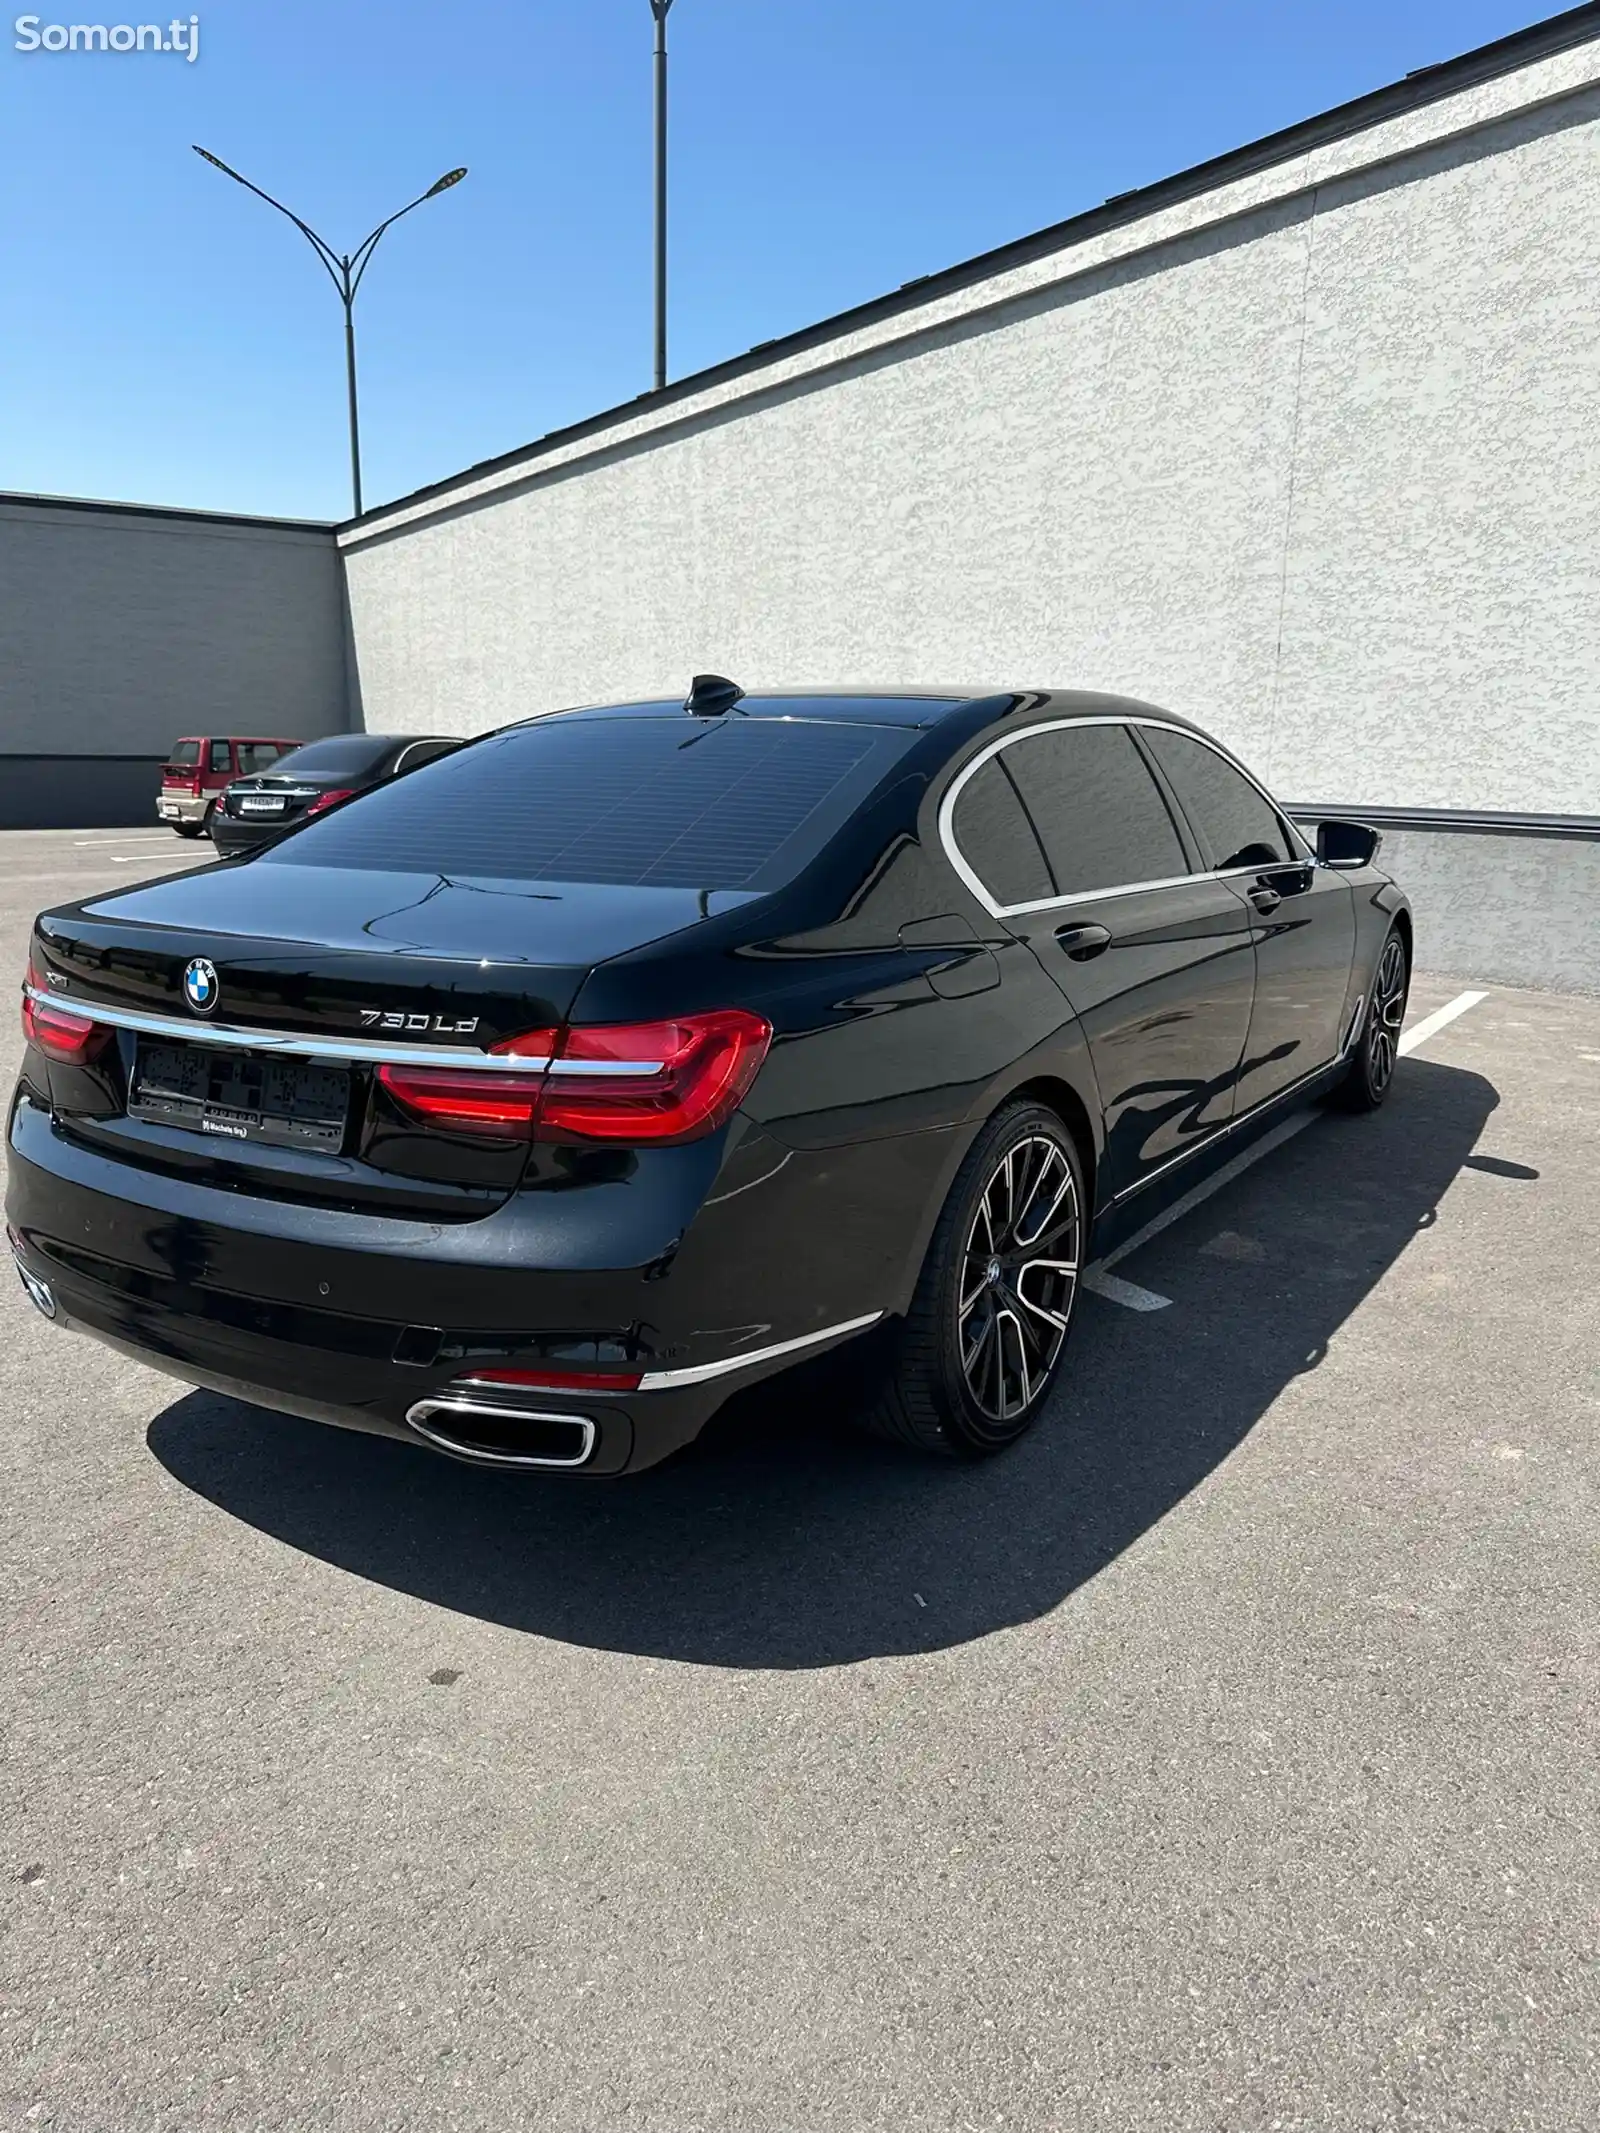 BMW 7 series, 2018-11